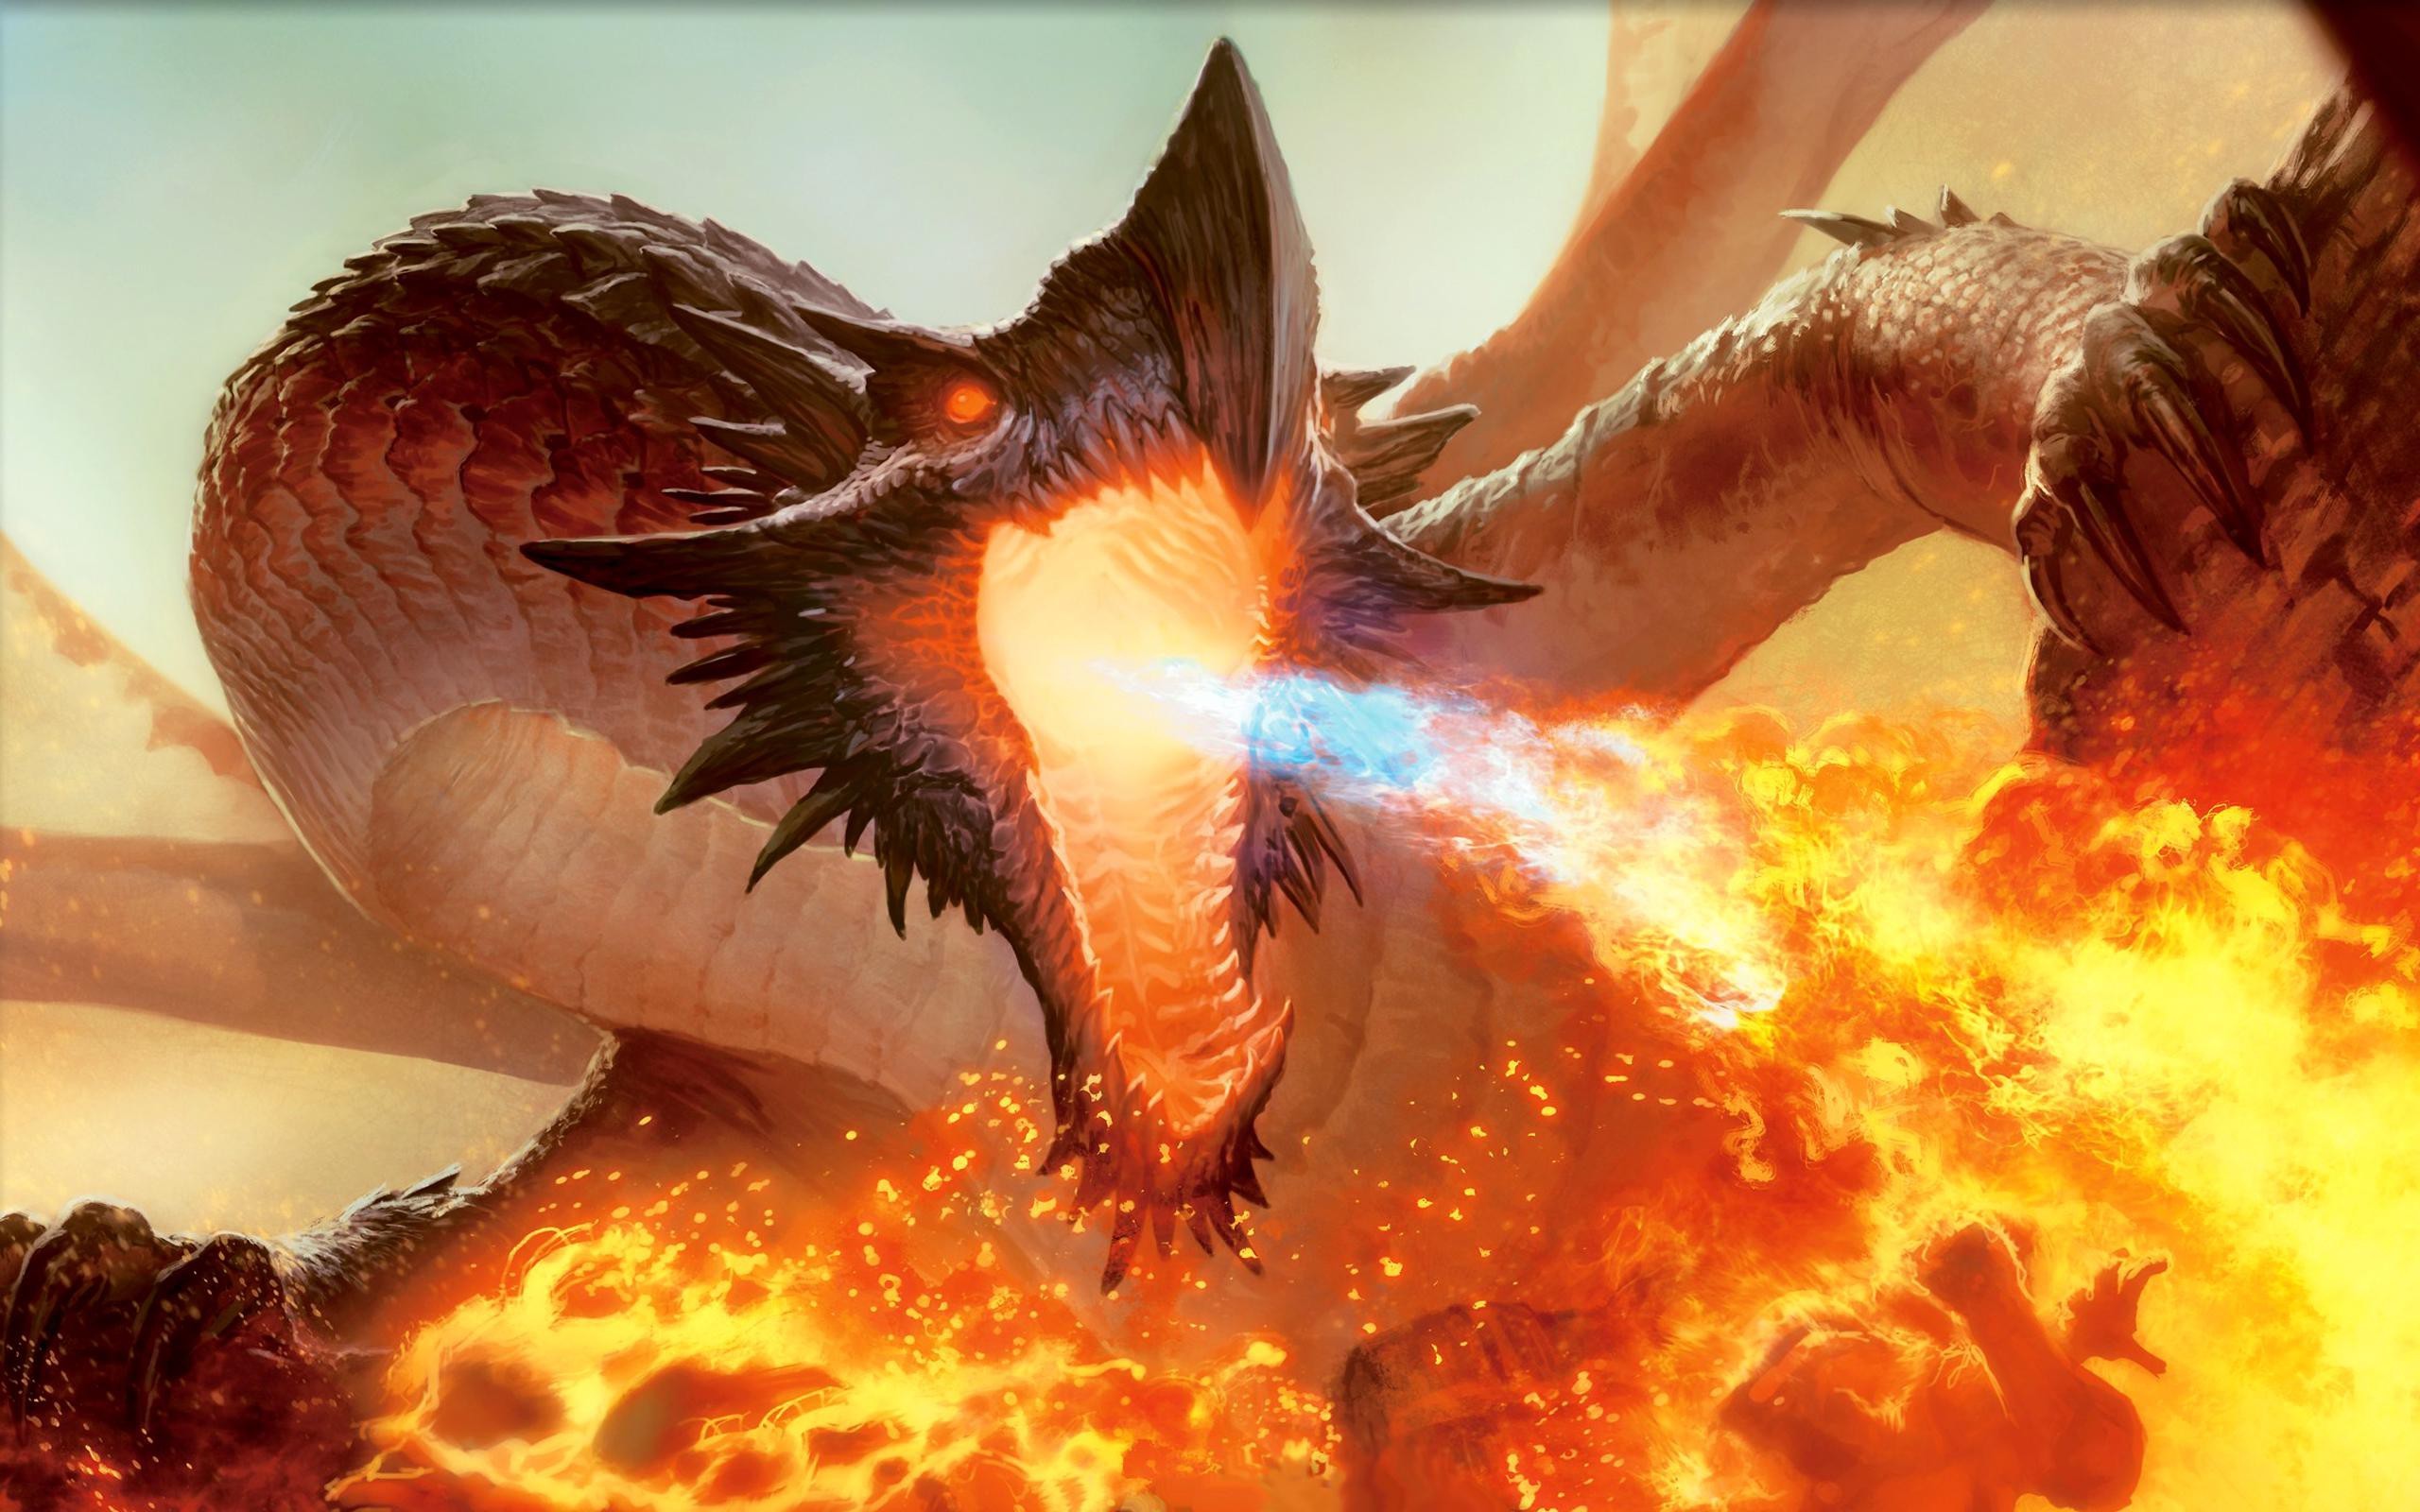 Fire breathing Dragon.